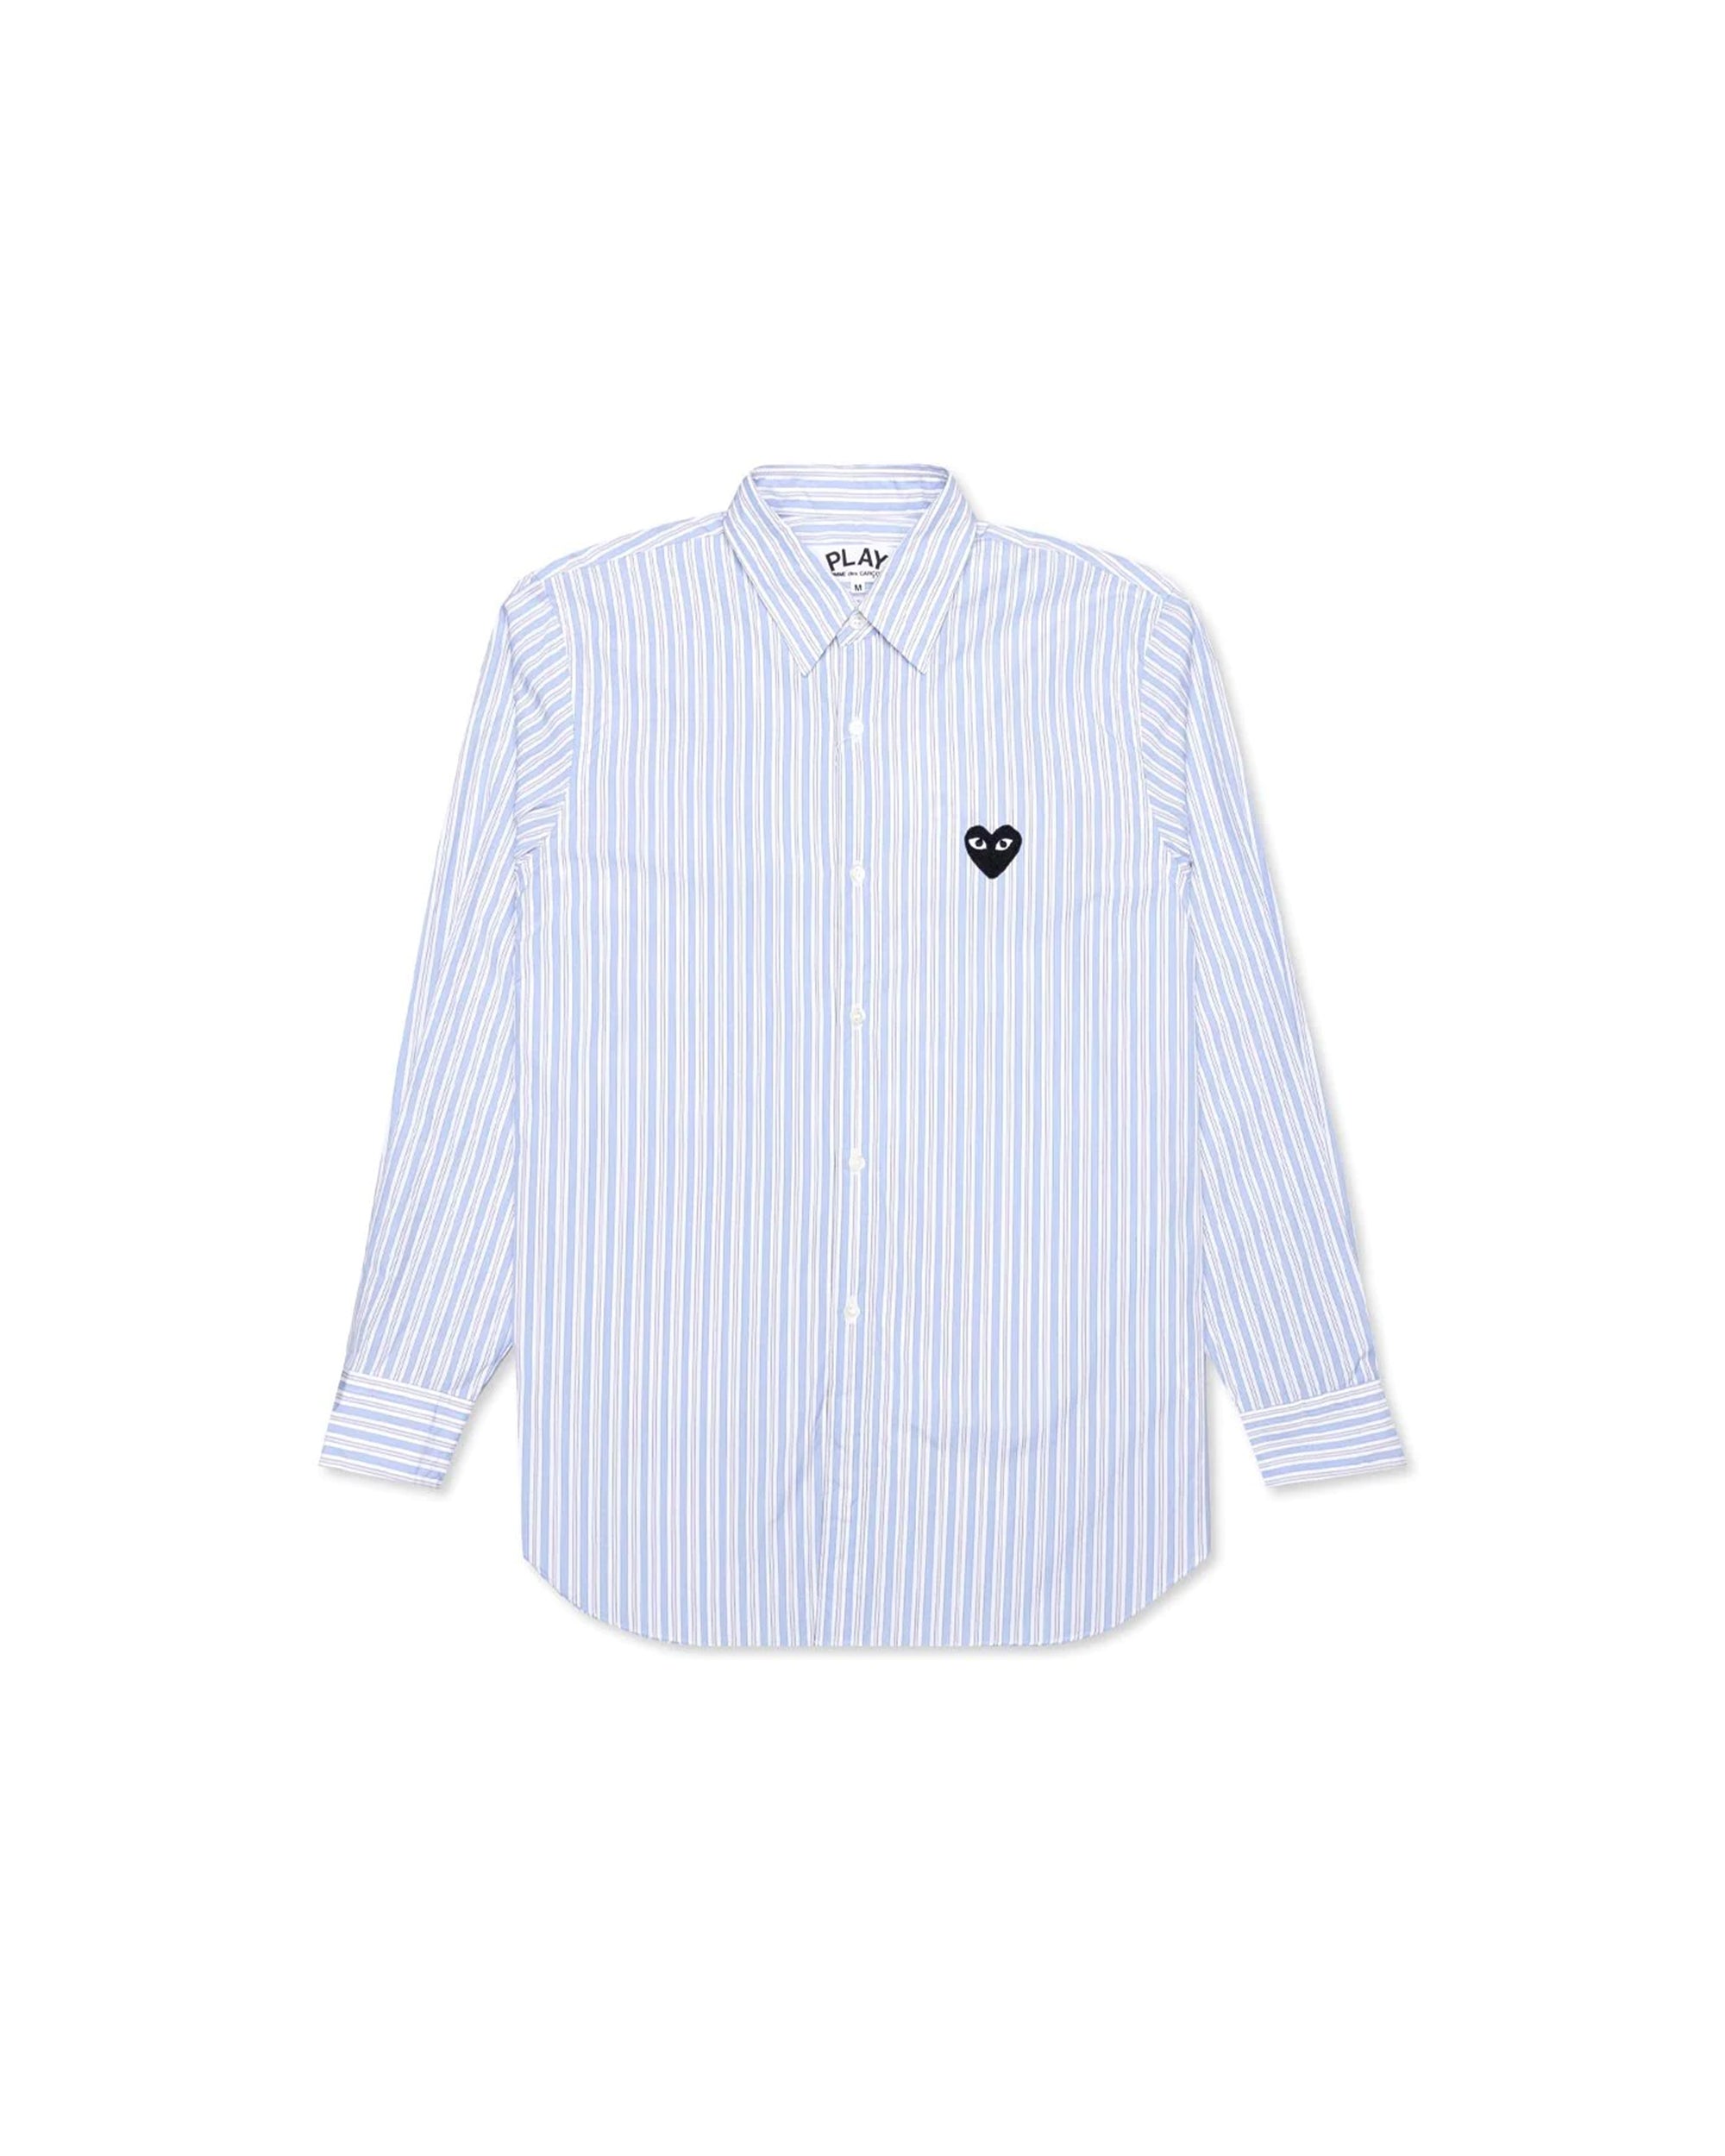 Striped Black Heart Button-down Shirt - Light Blue / White / Black